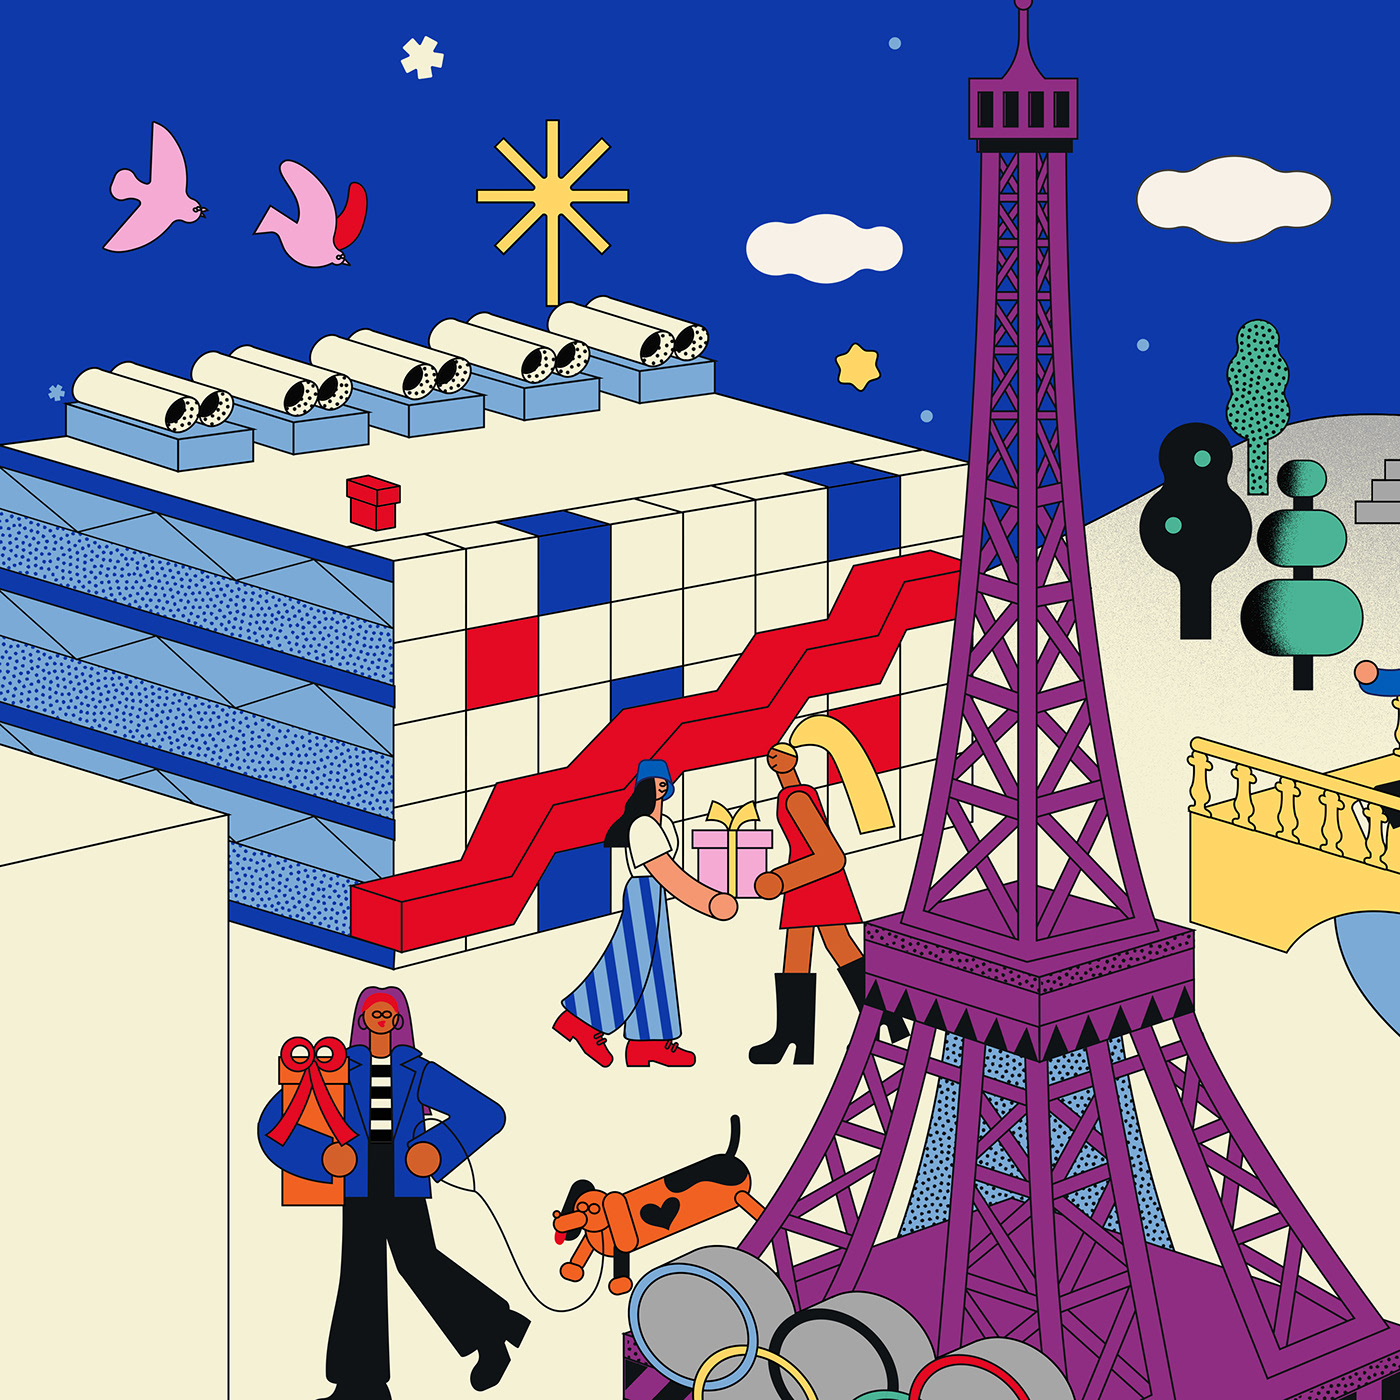 Poster Design 𝖠𝖽𝗈𝖻𝖾 𝖨𝗅𝗅𝗎𝗌𝗍𝗋𝖺𝗍𝗈𝗋 shanghai Paris celebtration